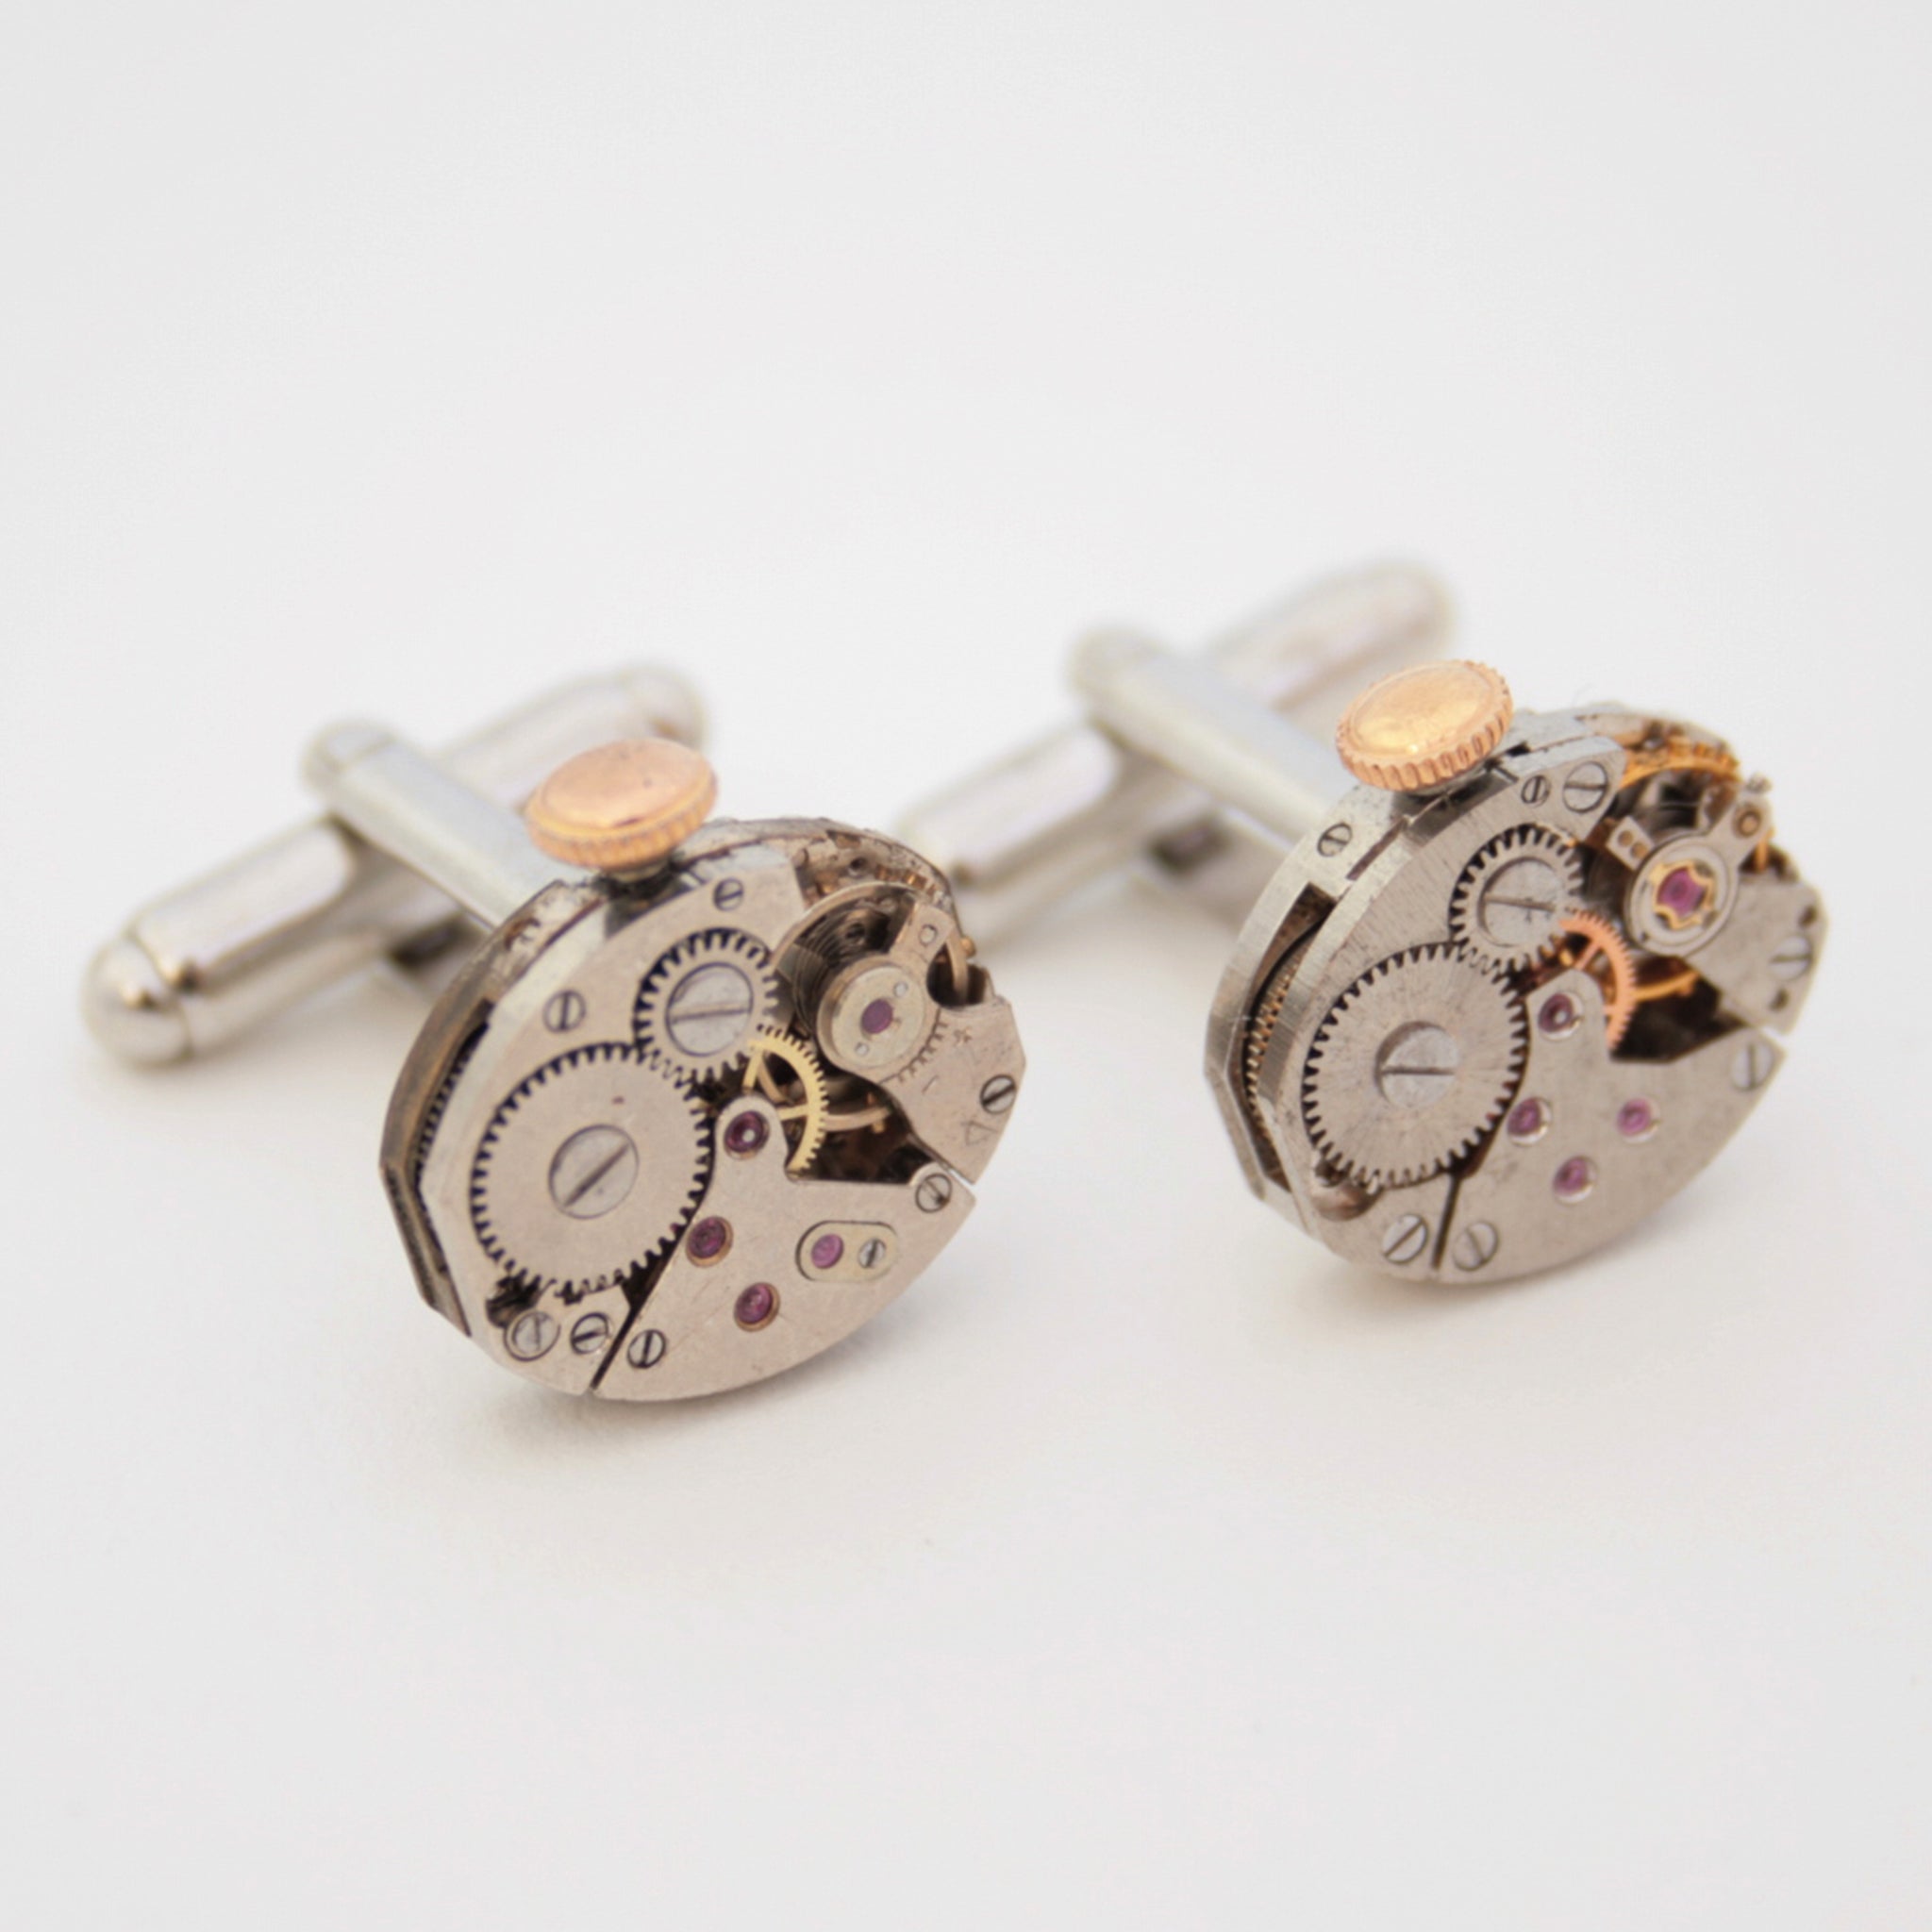 steampunk wedding cufflinks featuring antique watch movements with wind ups